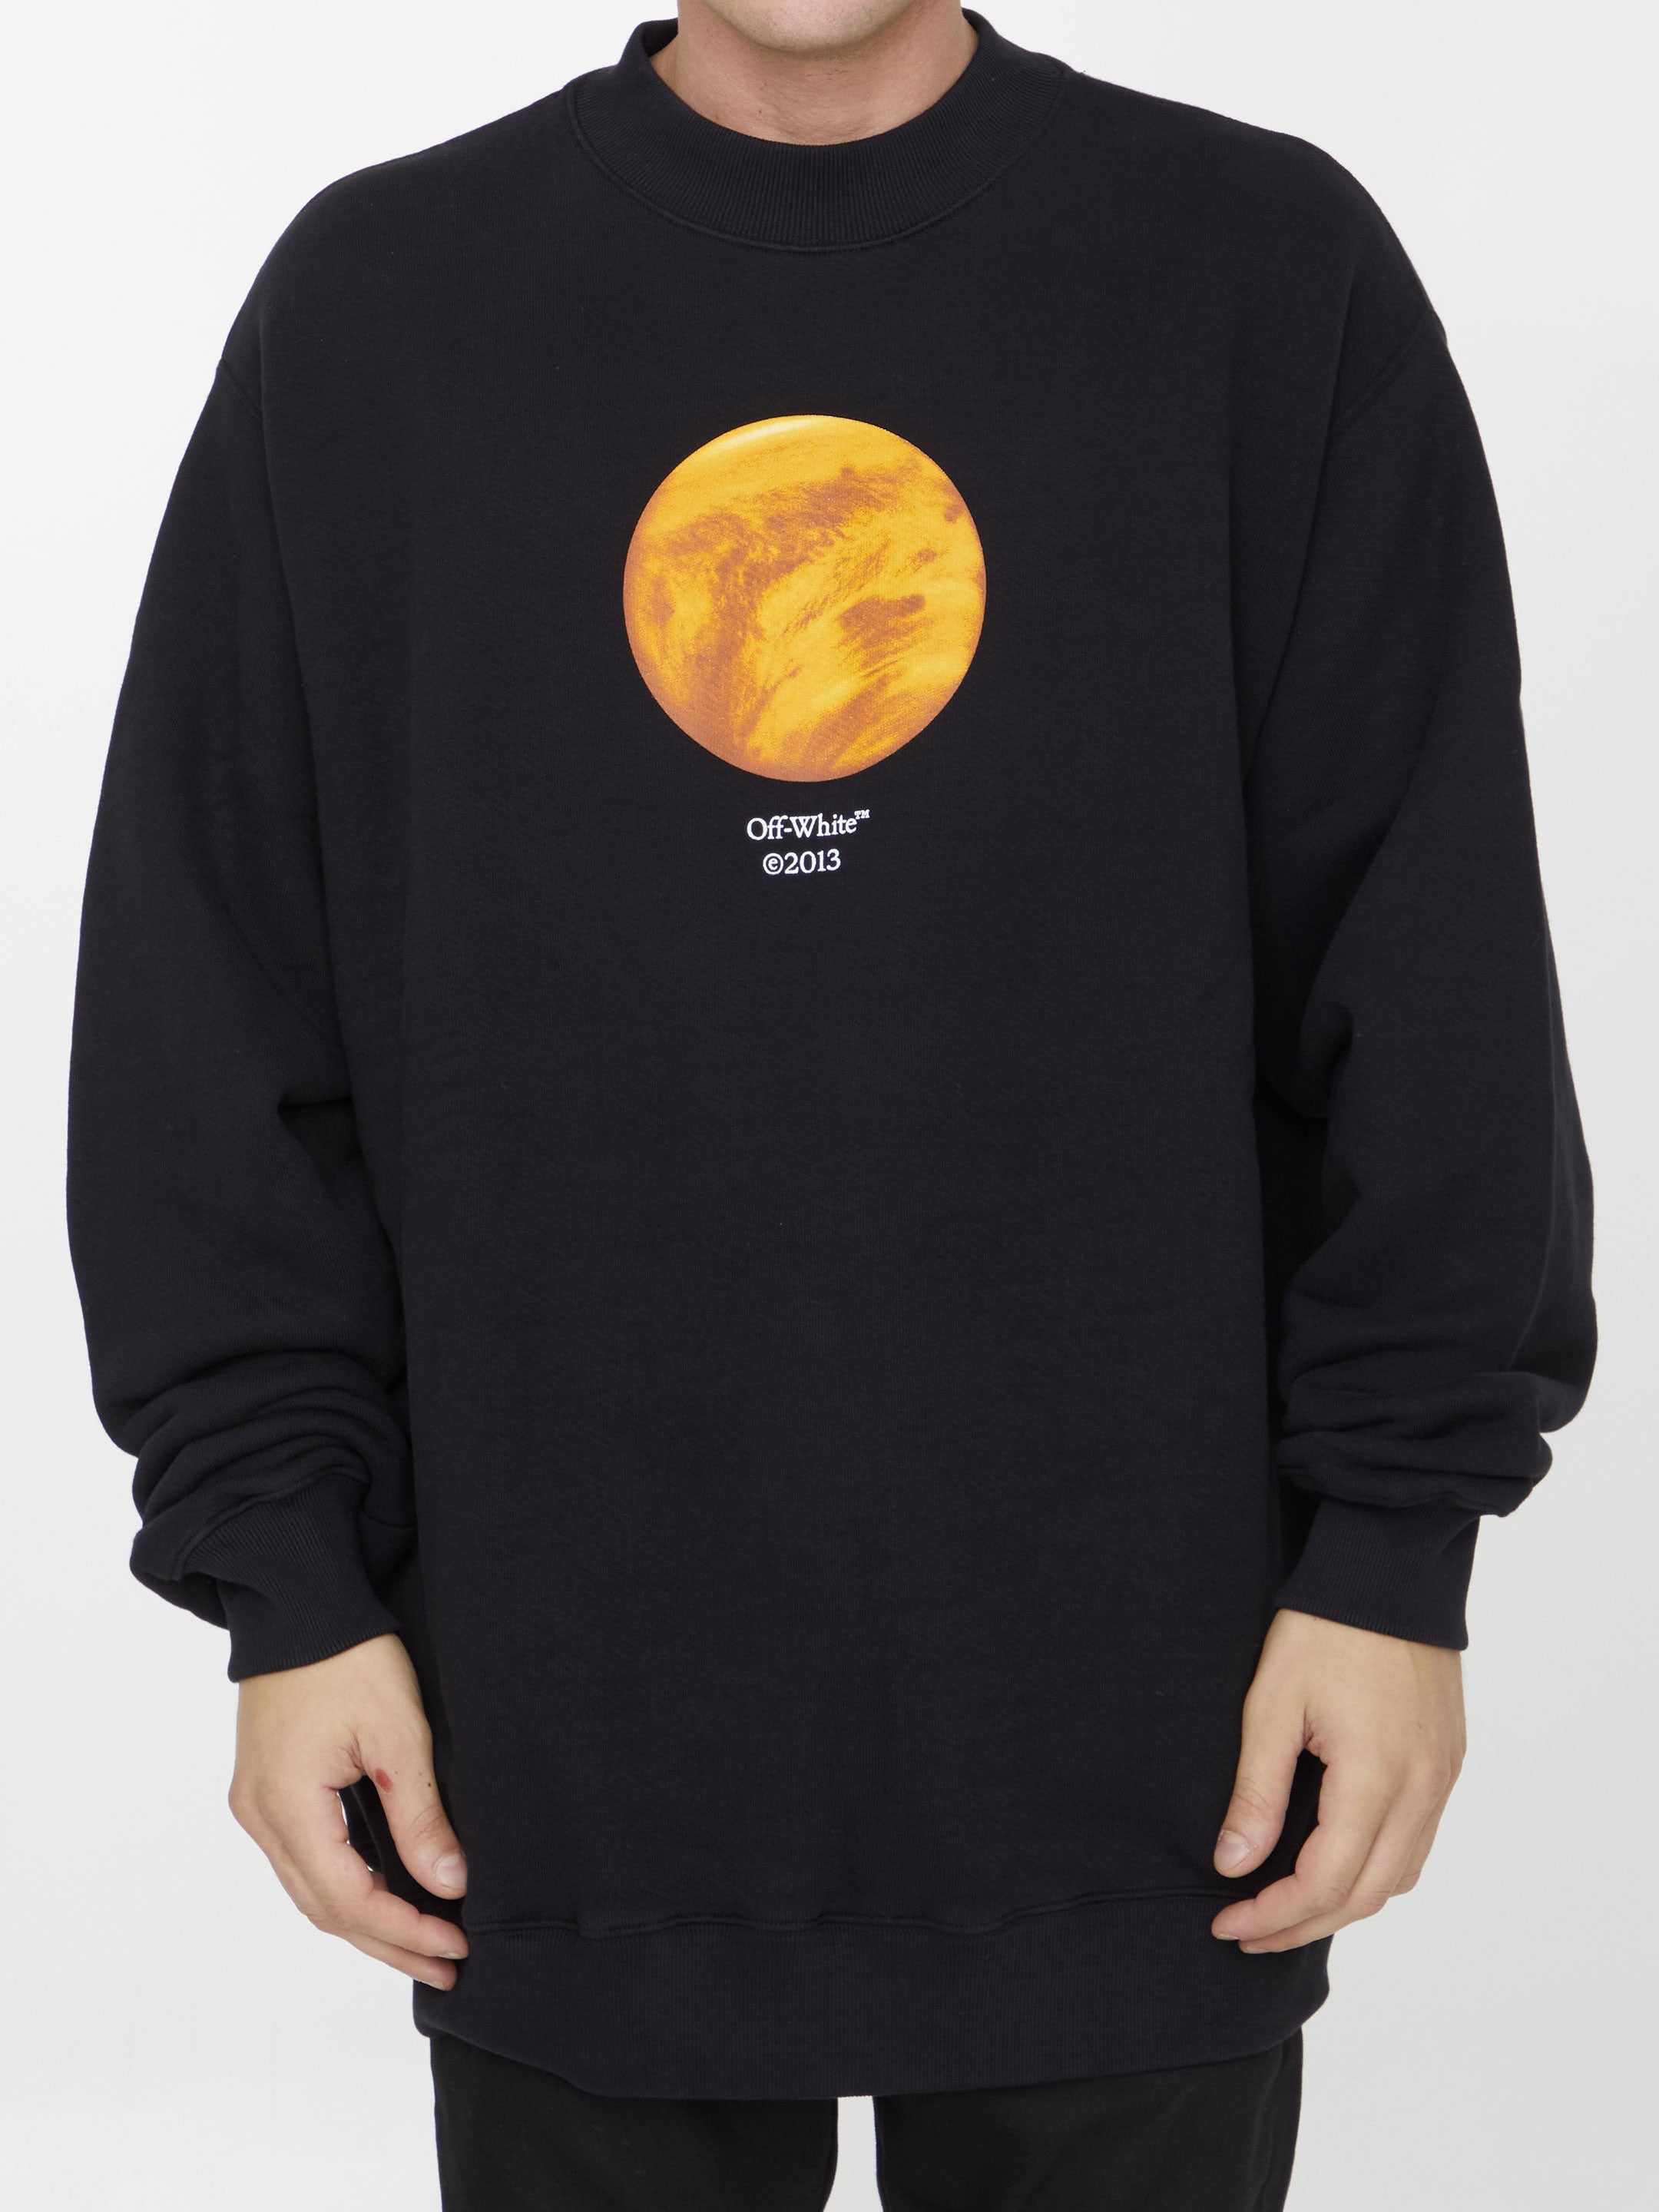 Venus sweatshirt